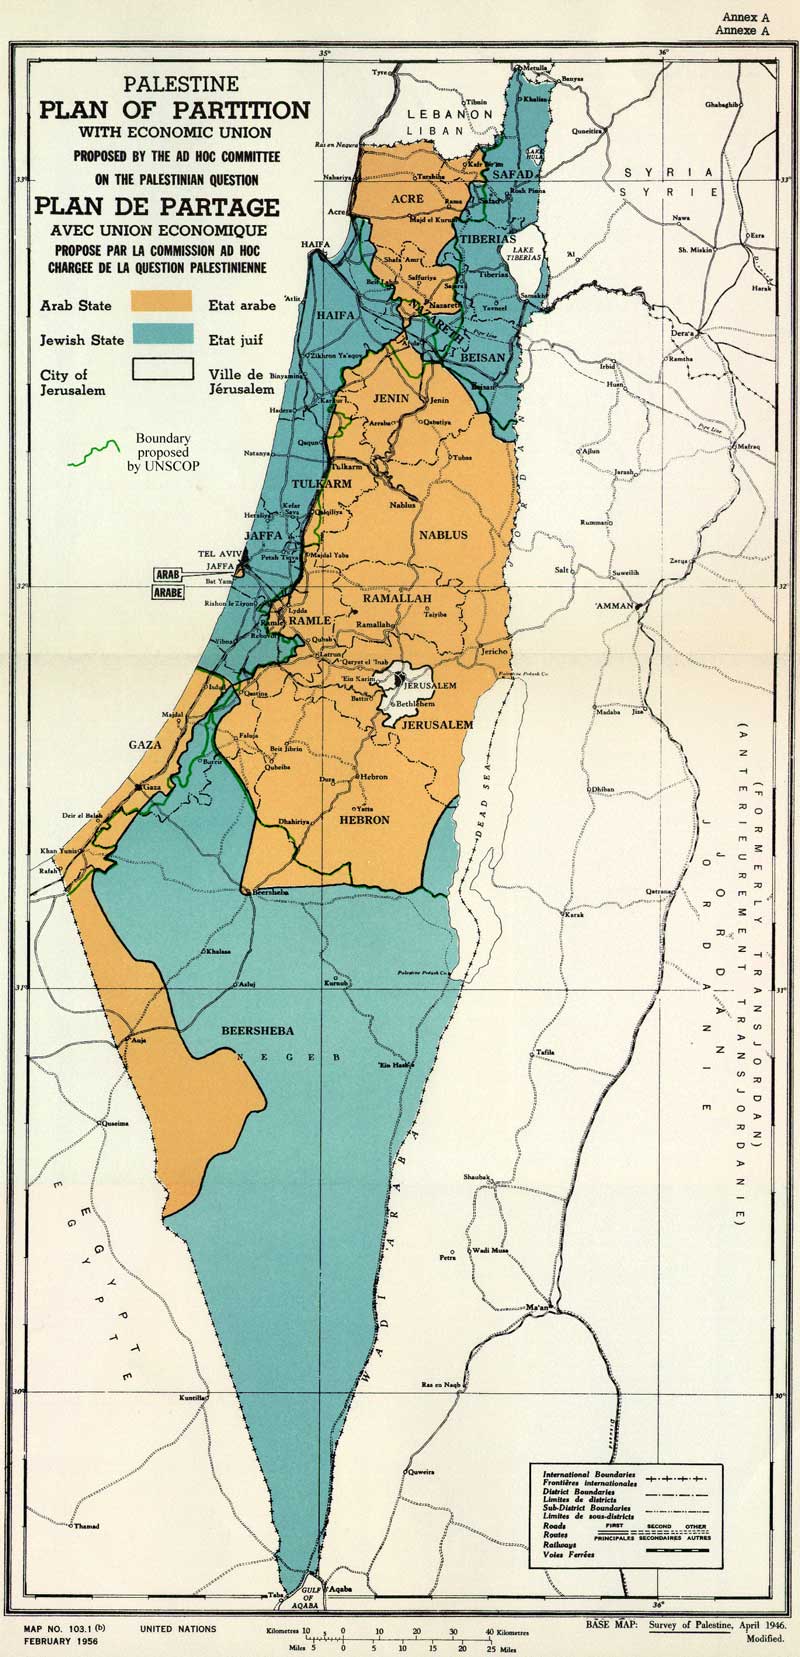 UN Partition Plan for Palestine, November 1947. Credit: UN General Assembly 181 (II)